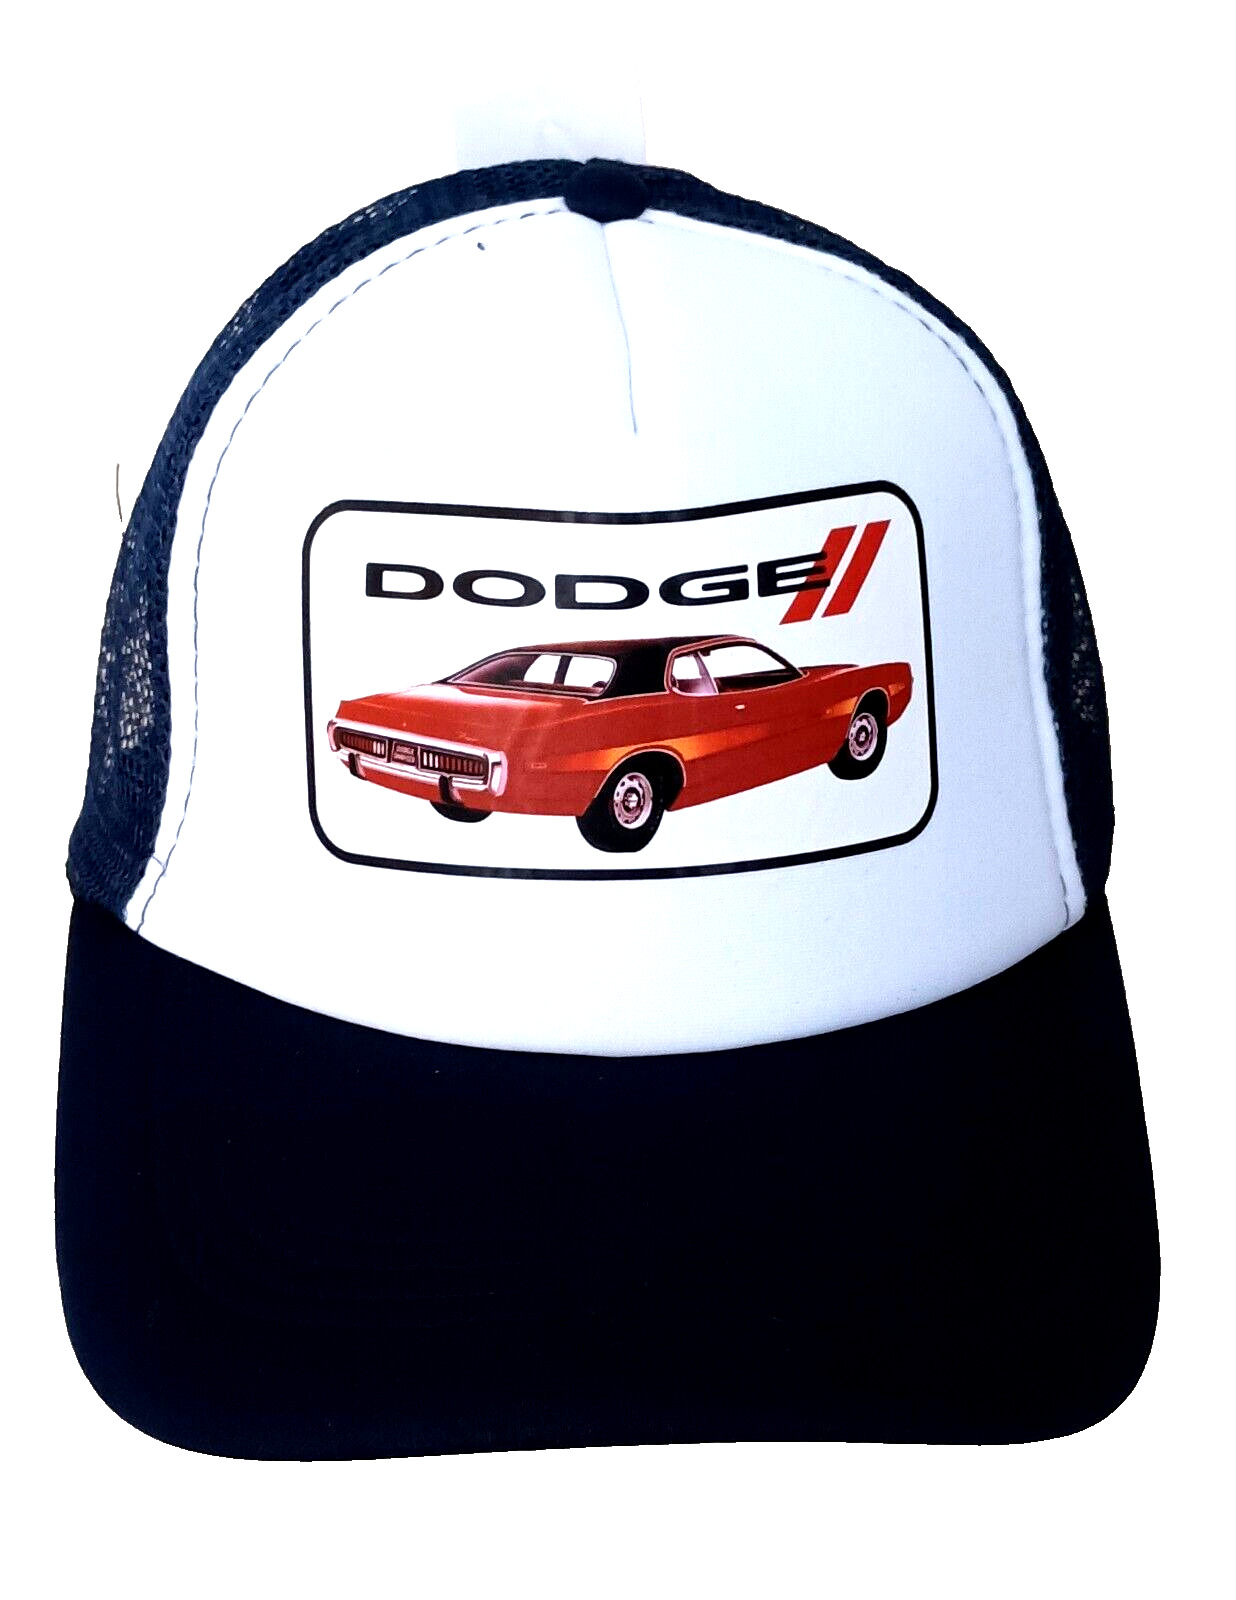 Retro 1971 Red Dodge Charger MOPAR Mesh Baseball Cap Hat SM/MD NOS New